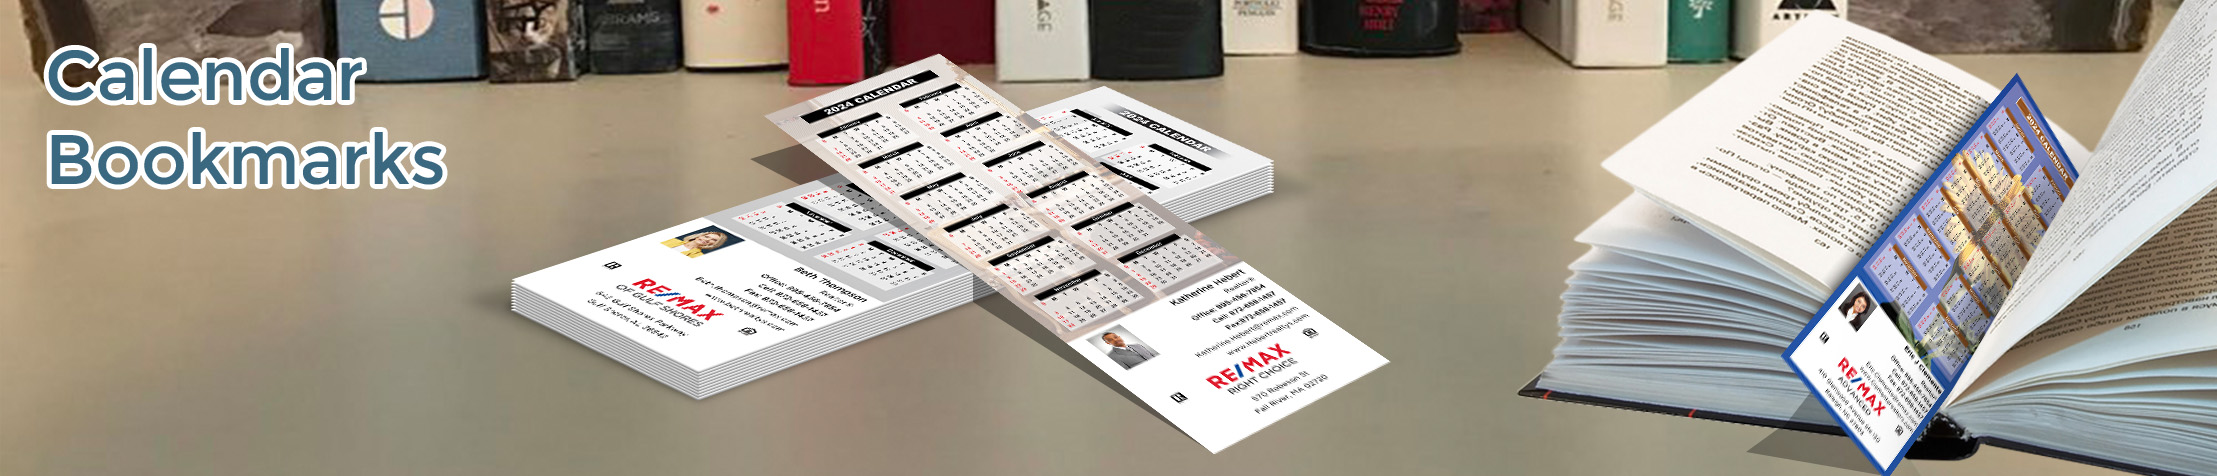 RE/MAX Real Estate Calendar Bookmarks - RE/MAX  2019 calendars printed on book markers | BestPrintBuy.com